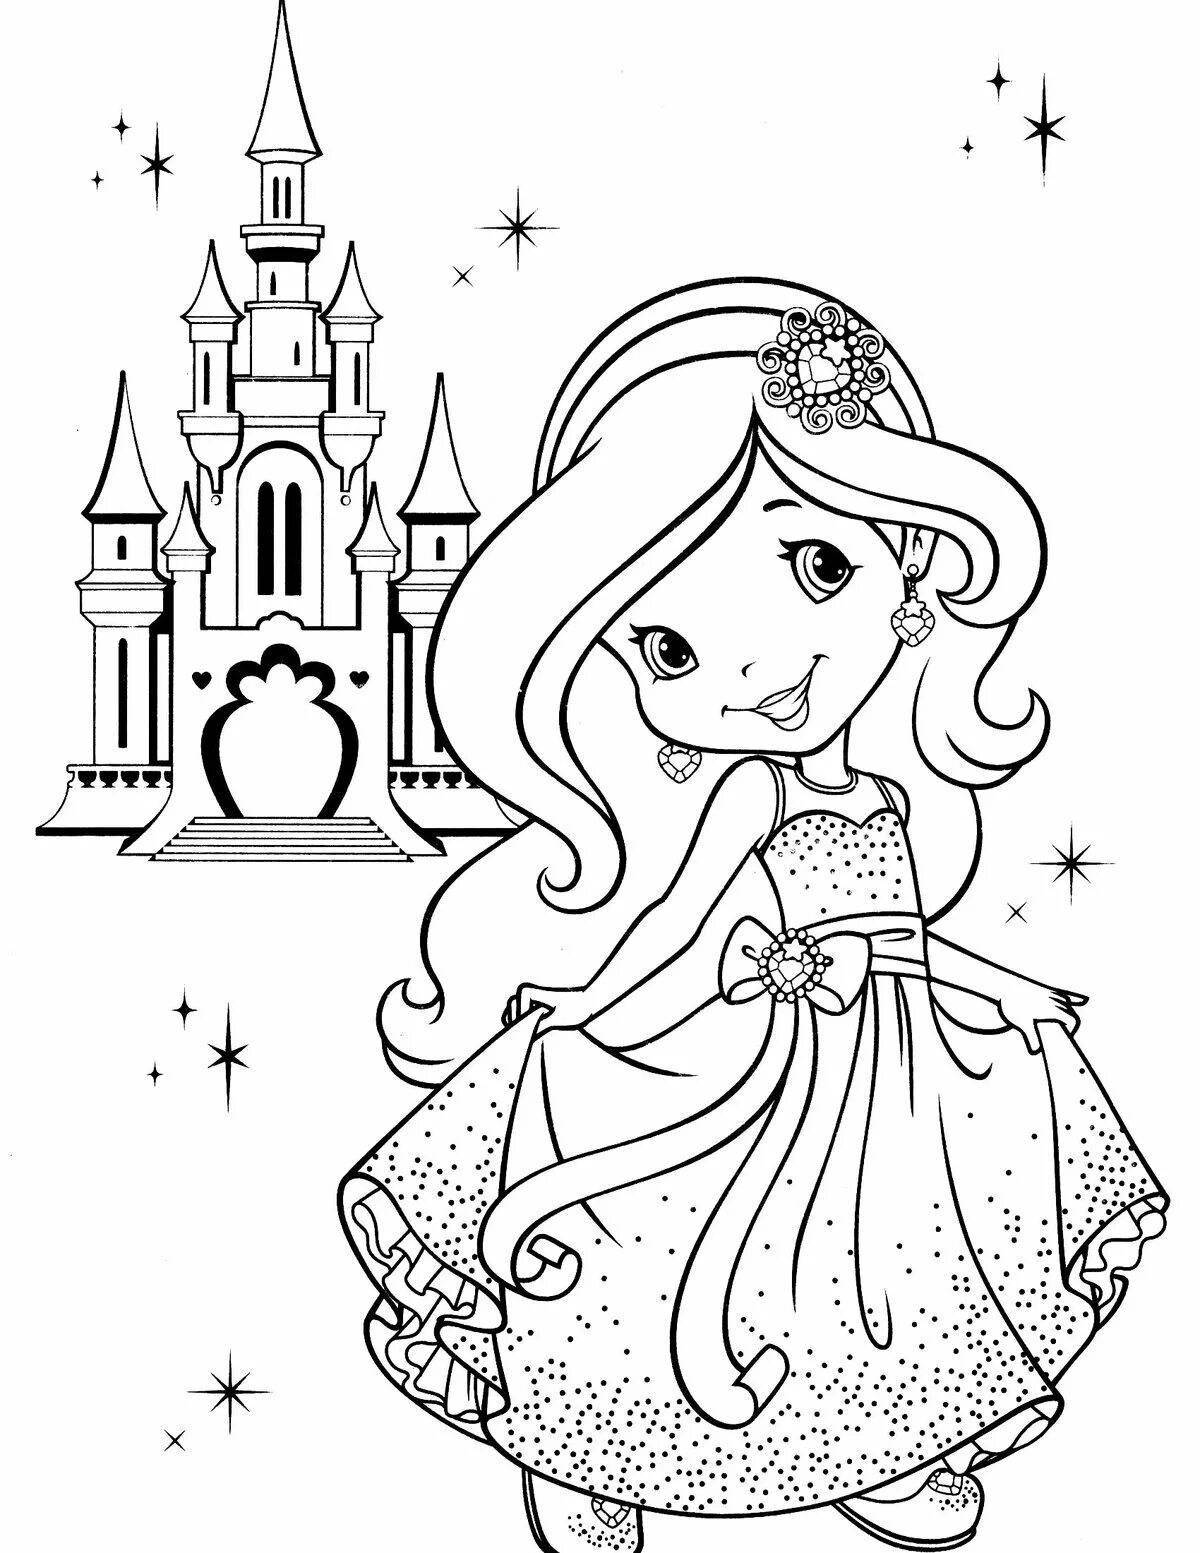 Adorable little princess coloring book